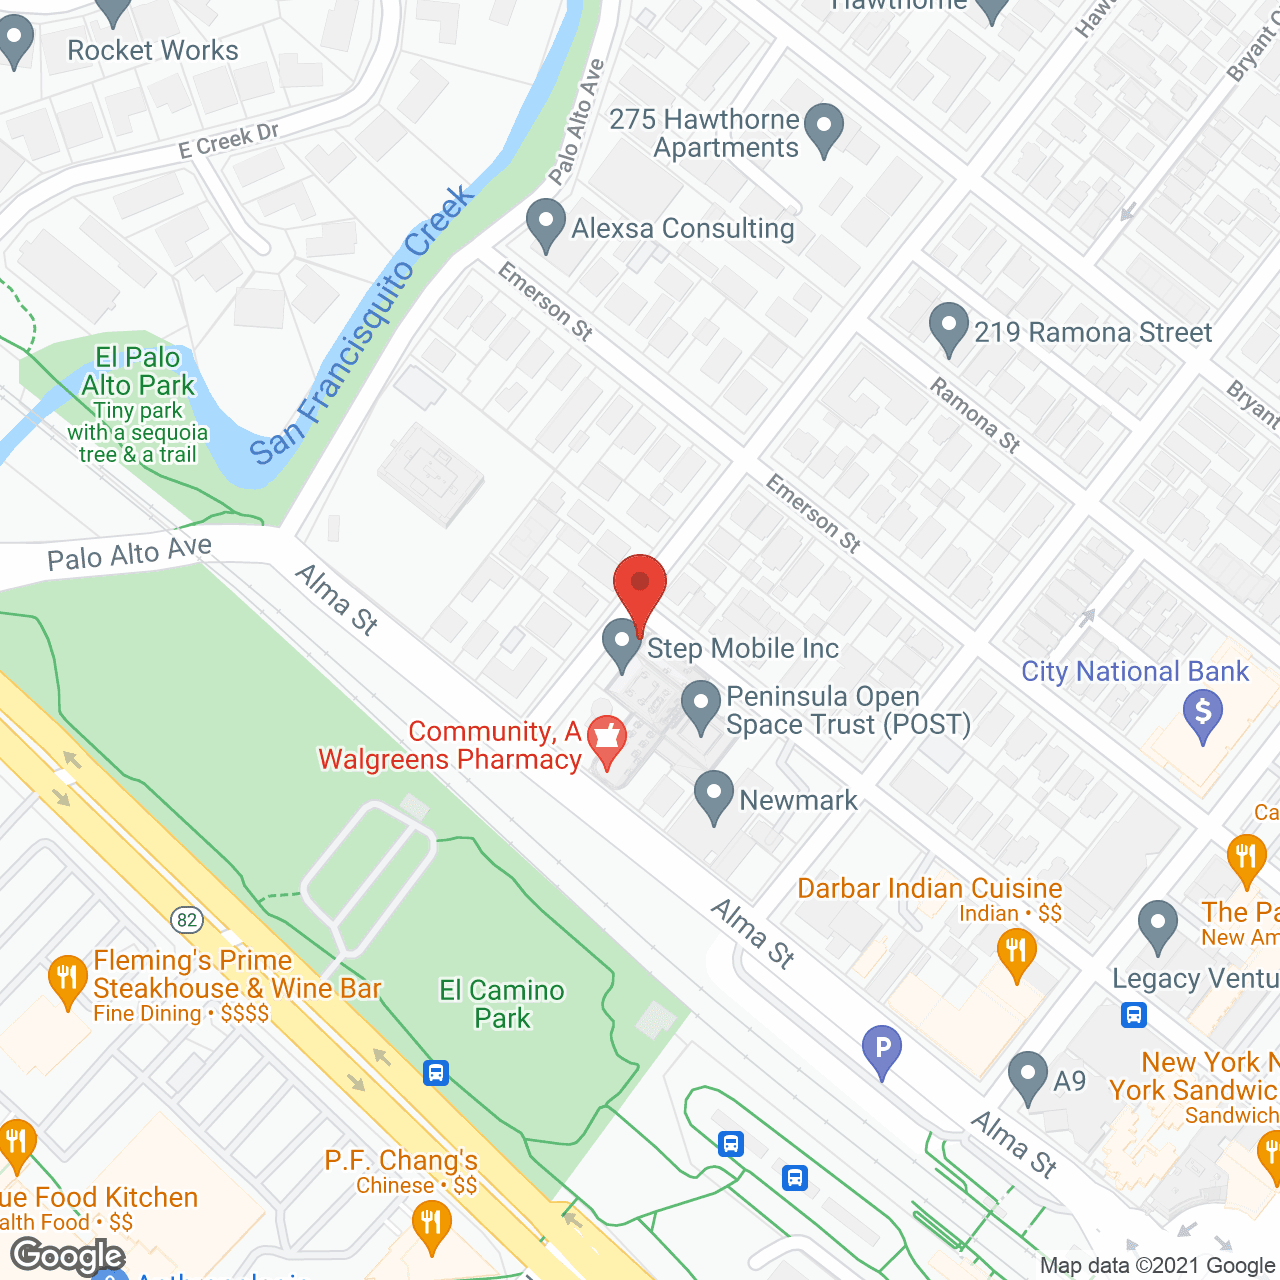 TheKey Palo Alto in google map